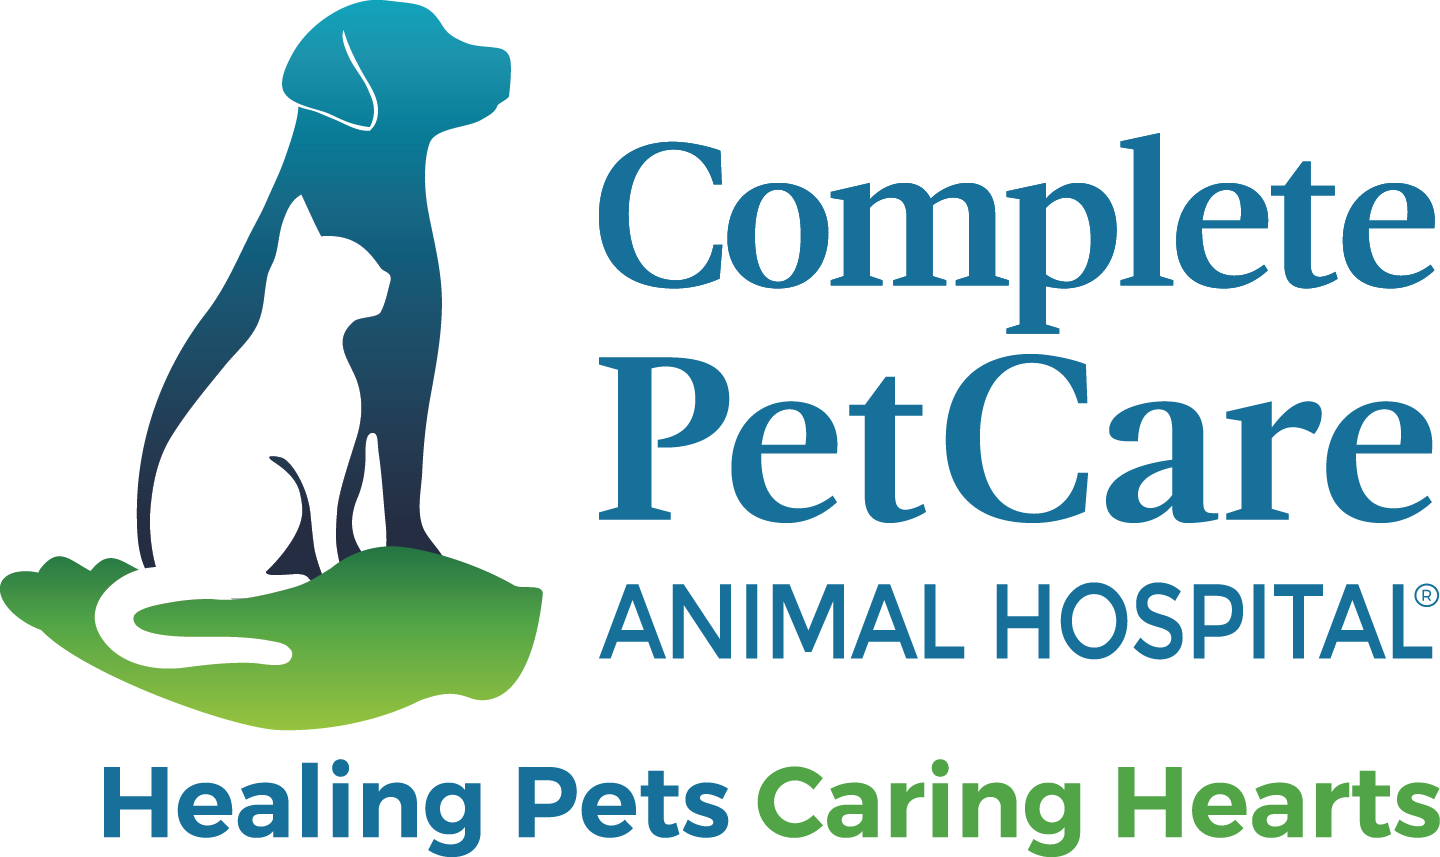 Complete Pet Care Animal Hospital Announces New Website Launch